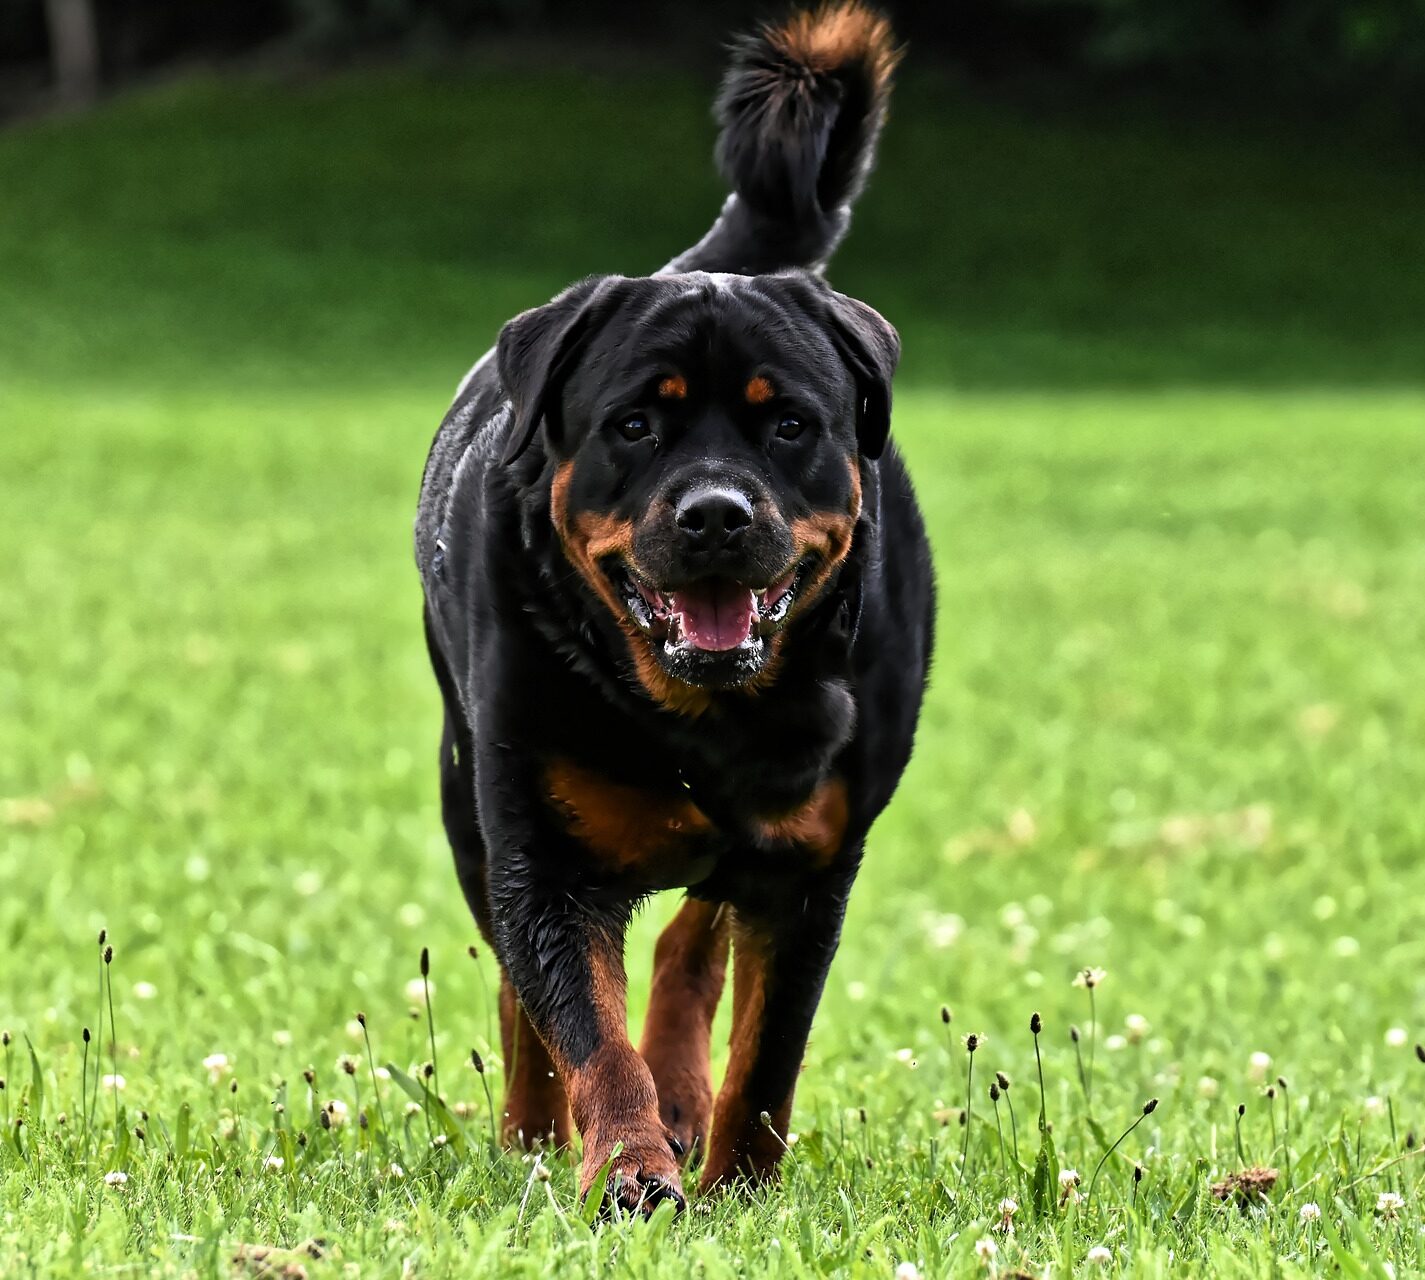 Black Rottweiler walking in the field of grass